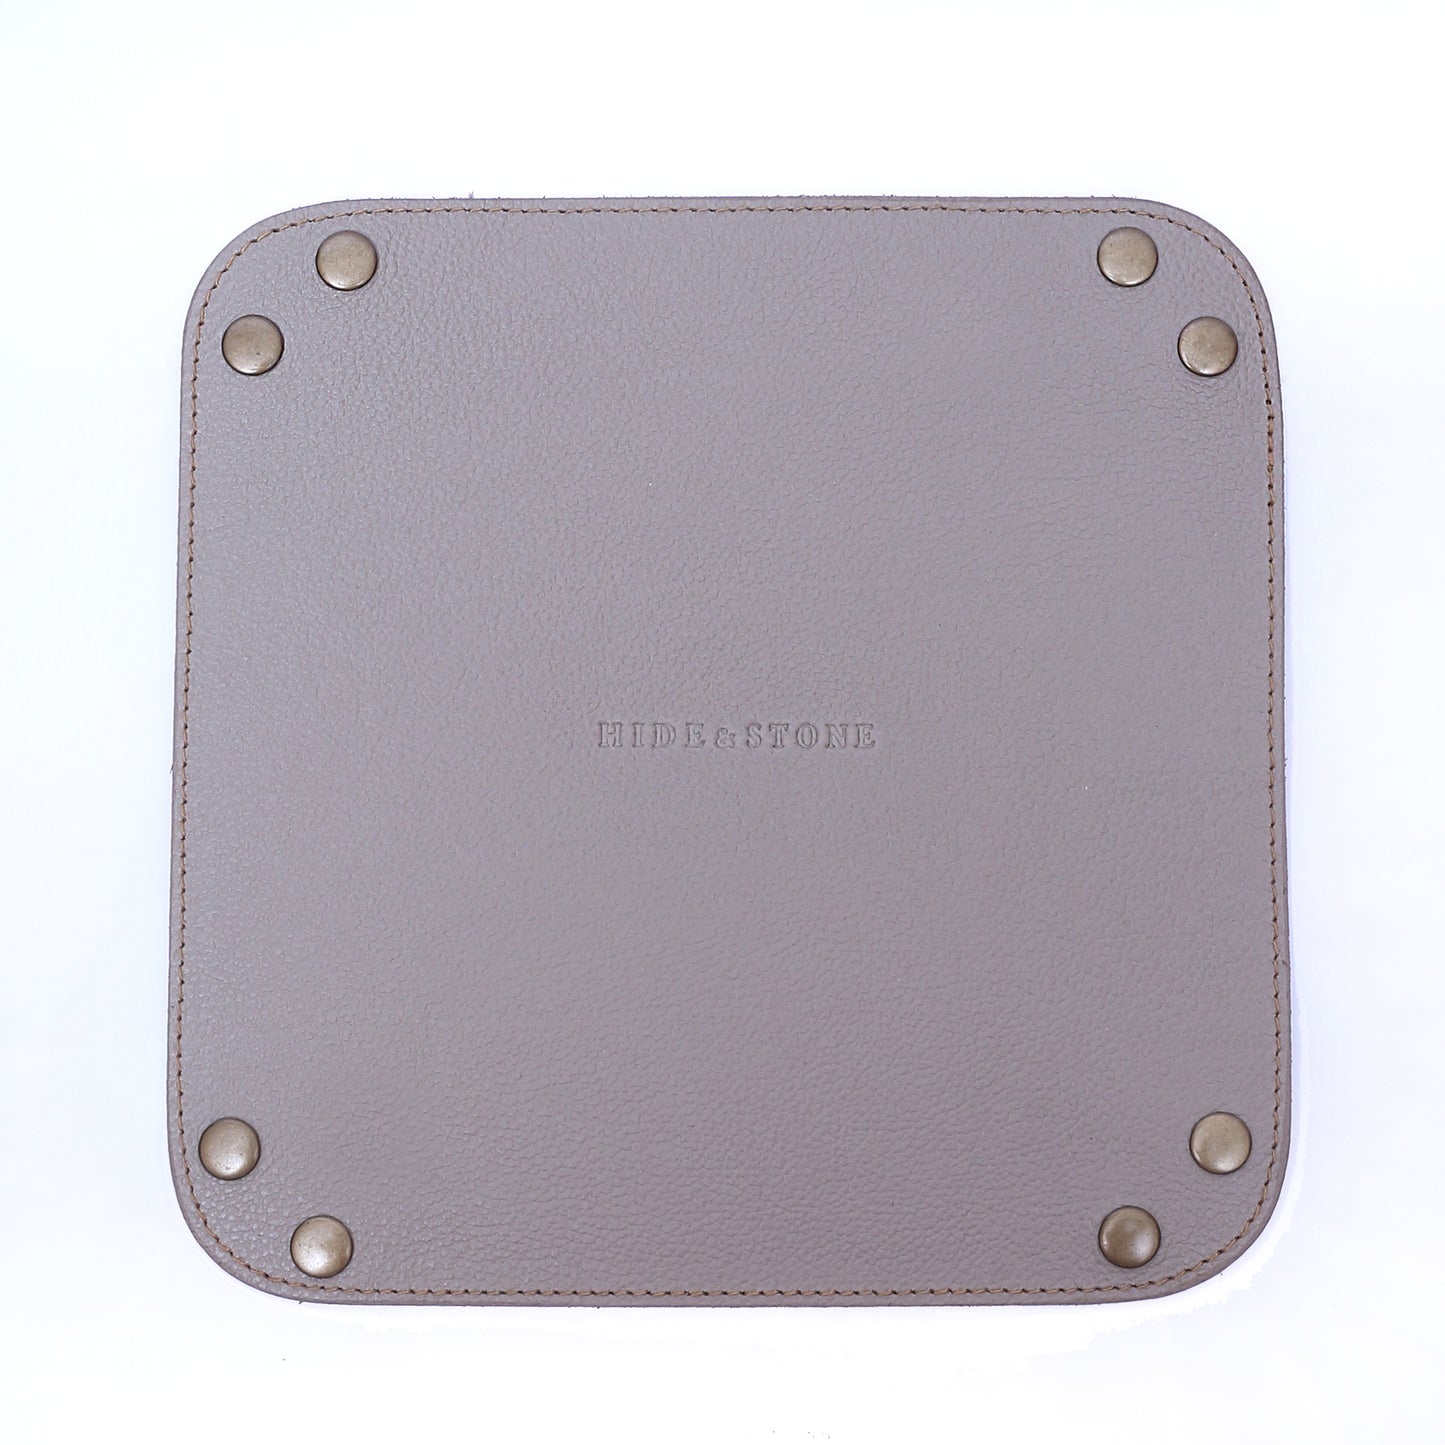 Leather Key & Watch Tray (Grey/Beige)